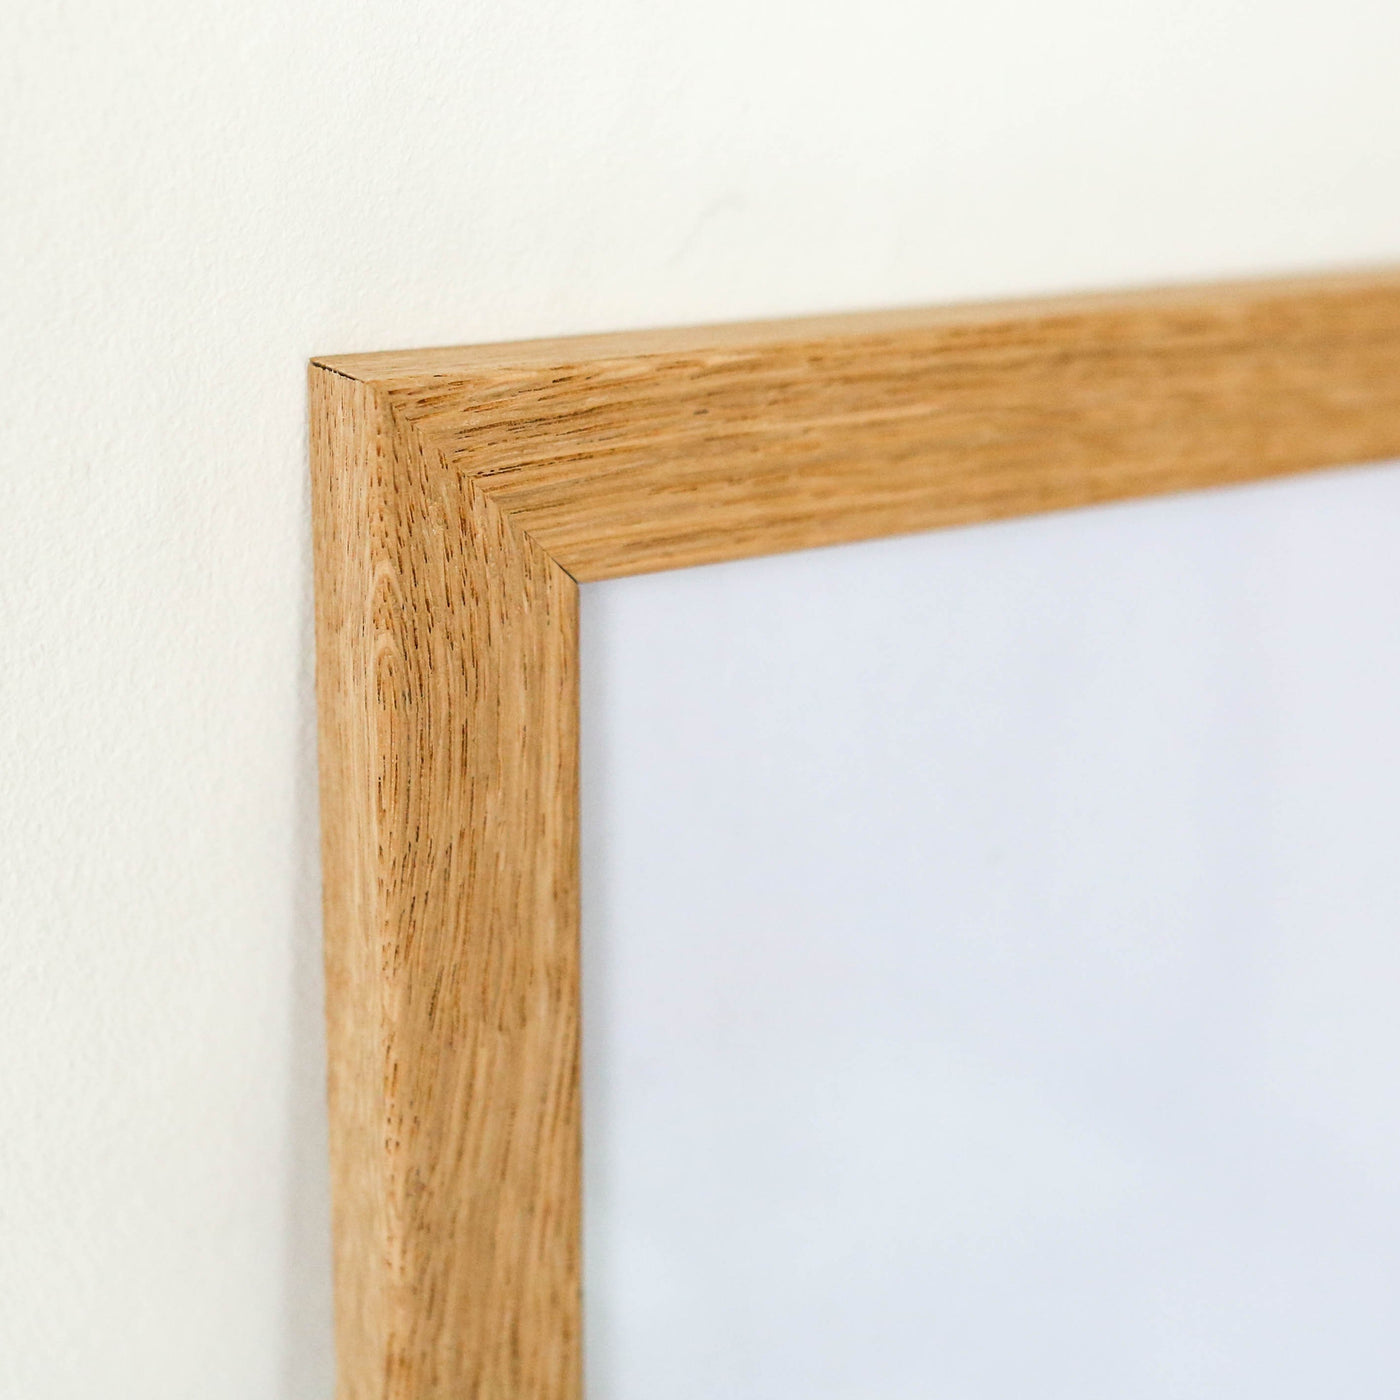 Solid Oak Wood Frame - 30 x 40cm